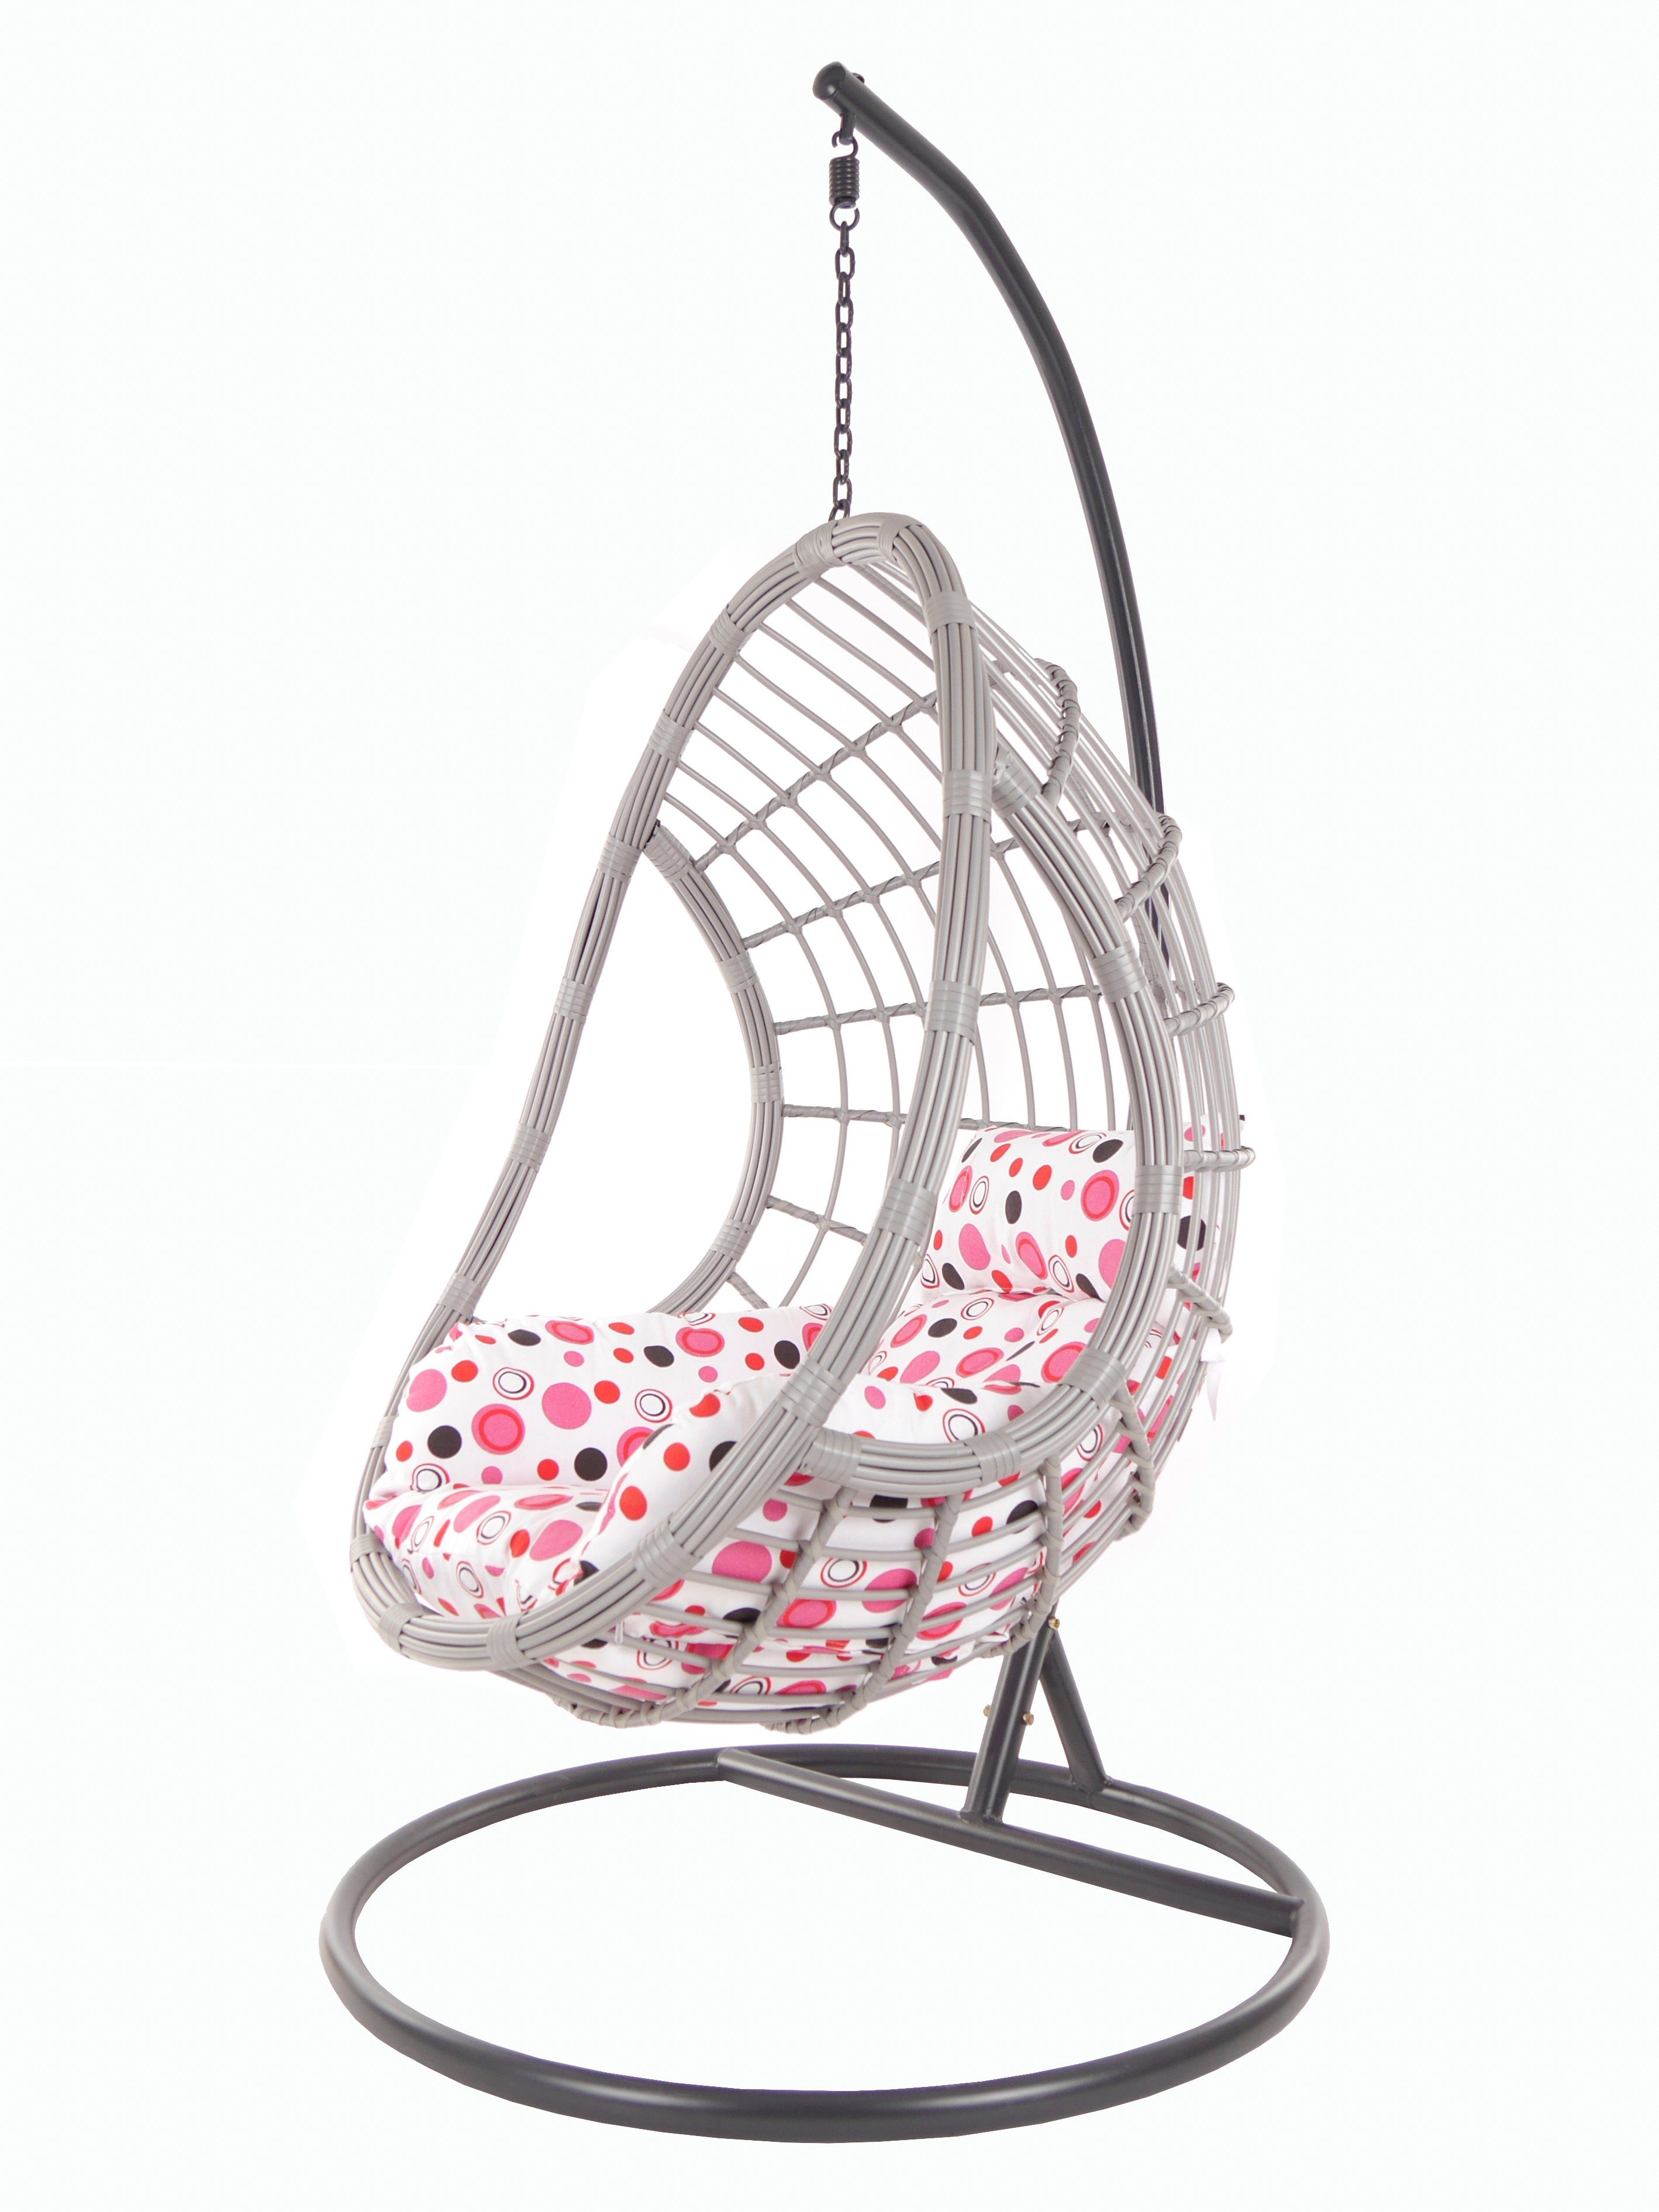 KIDEO Hängesessel PALMANOVA lightgrey, Swing Chair, Loungemöbel, Hängesessel mit Gestell und Kissen gepunktet rosa (3039 lemonade dot)